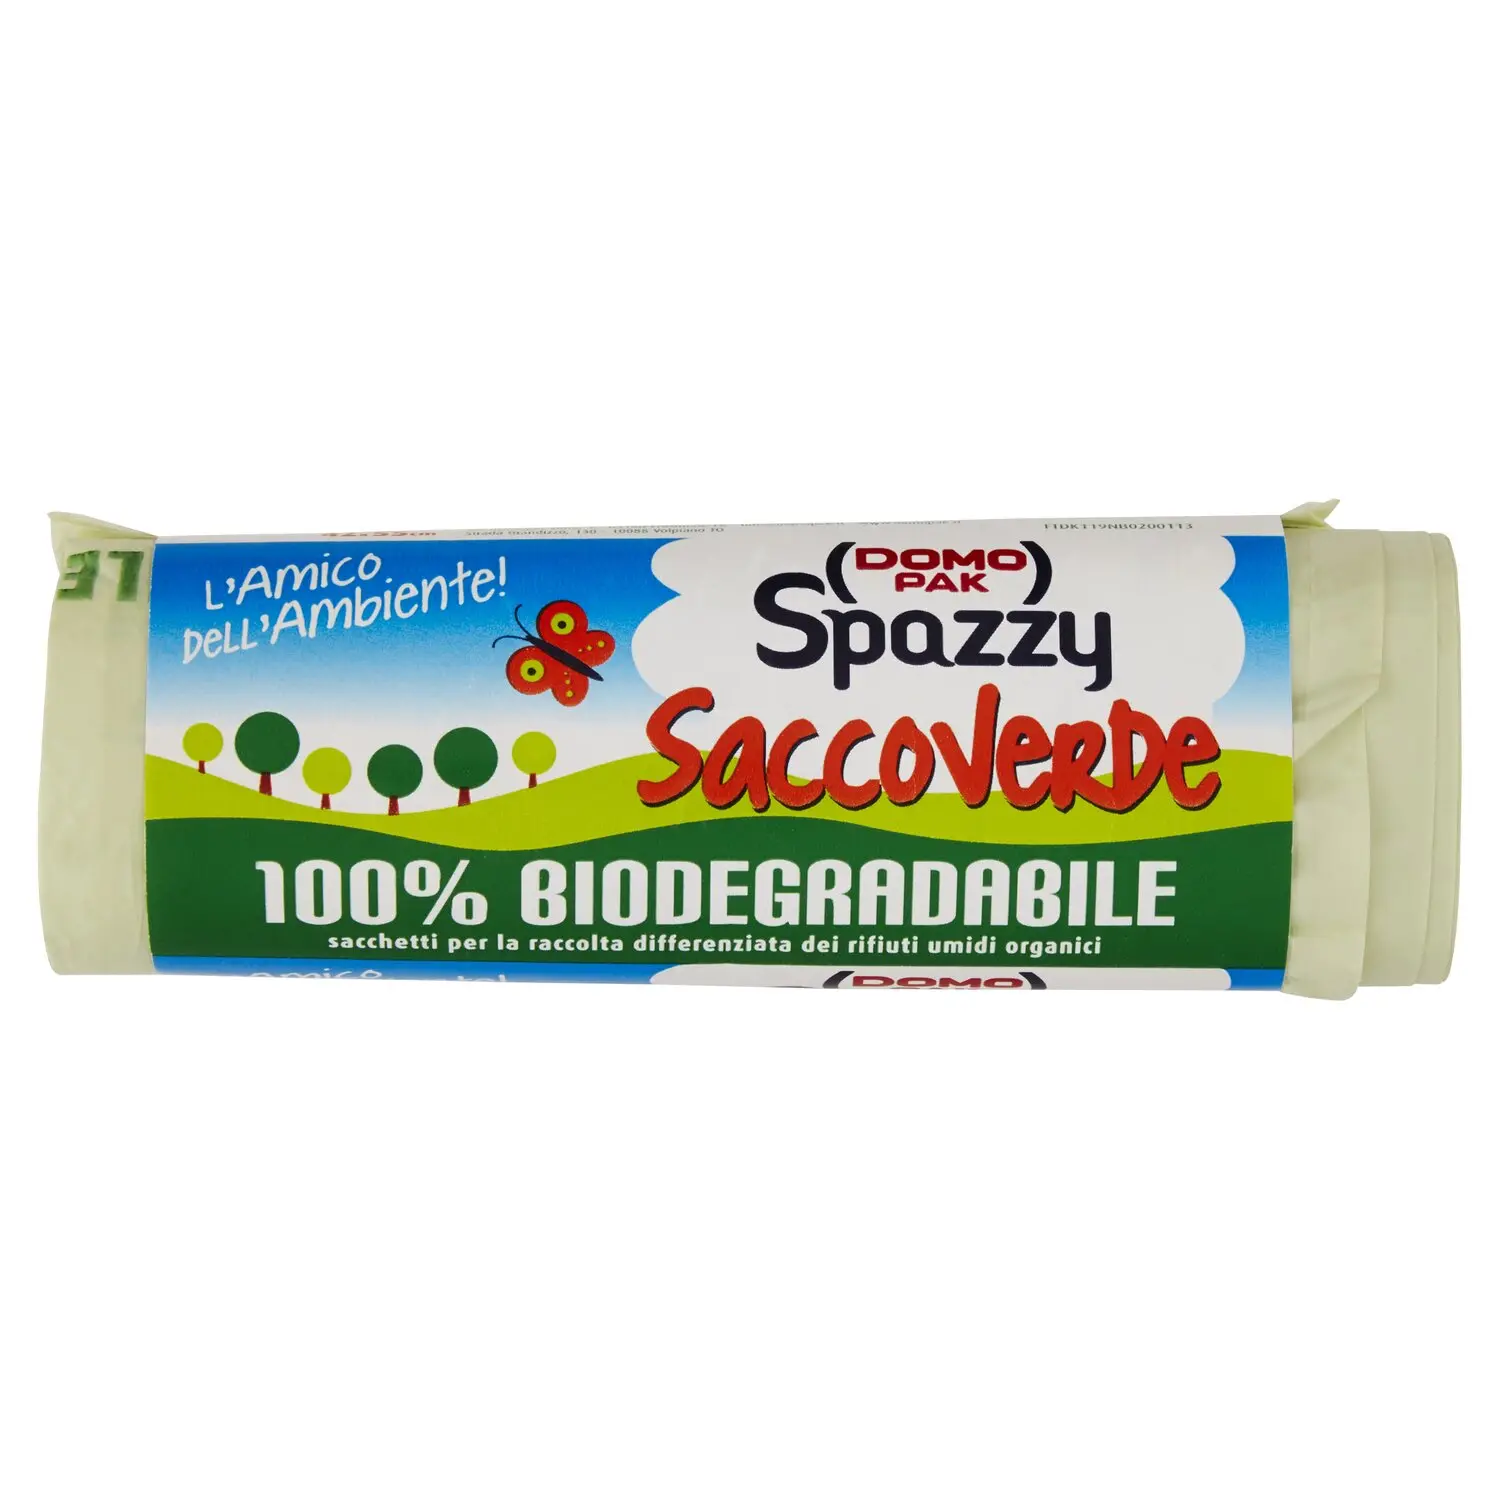 Domopak Spazzy SaccoVerde 100% Biodegradabile (20 litri - 20 sacchi  nettezza)